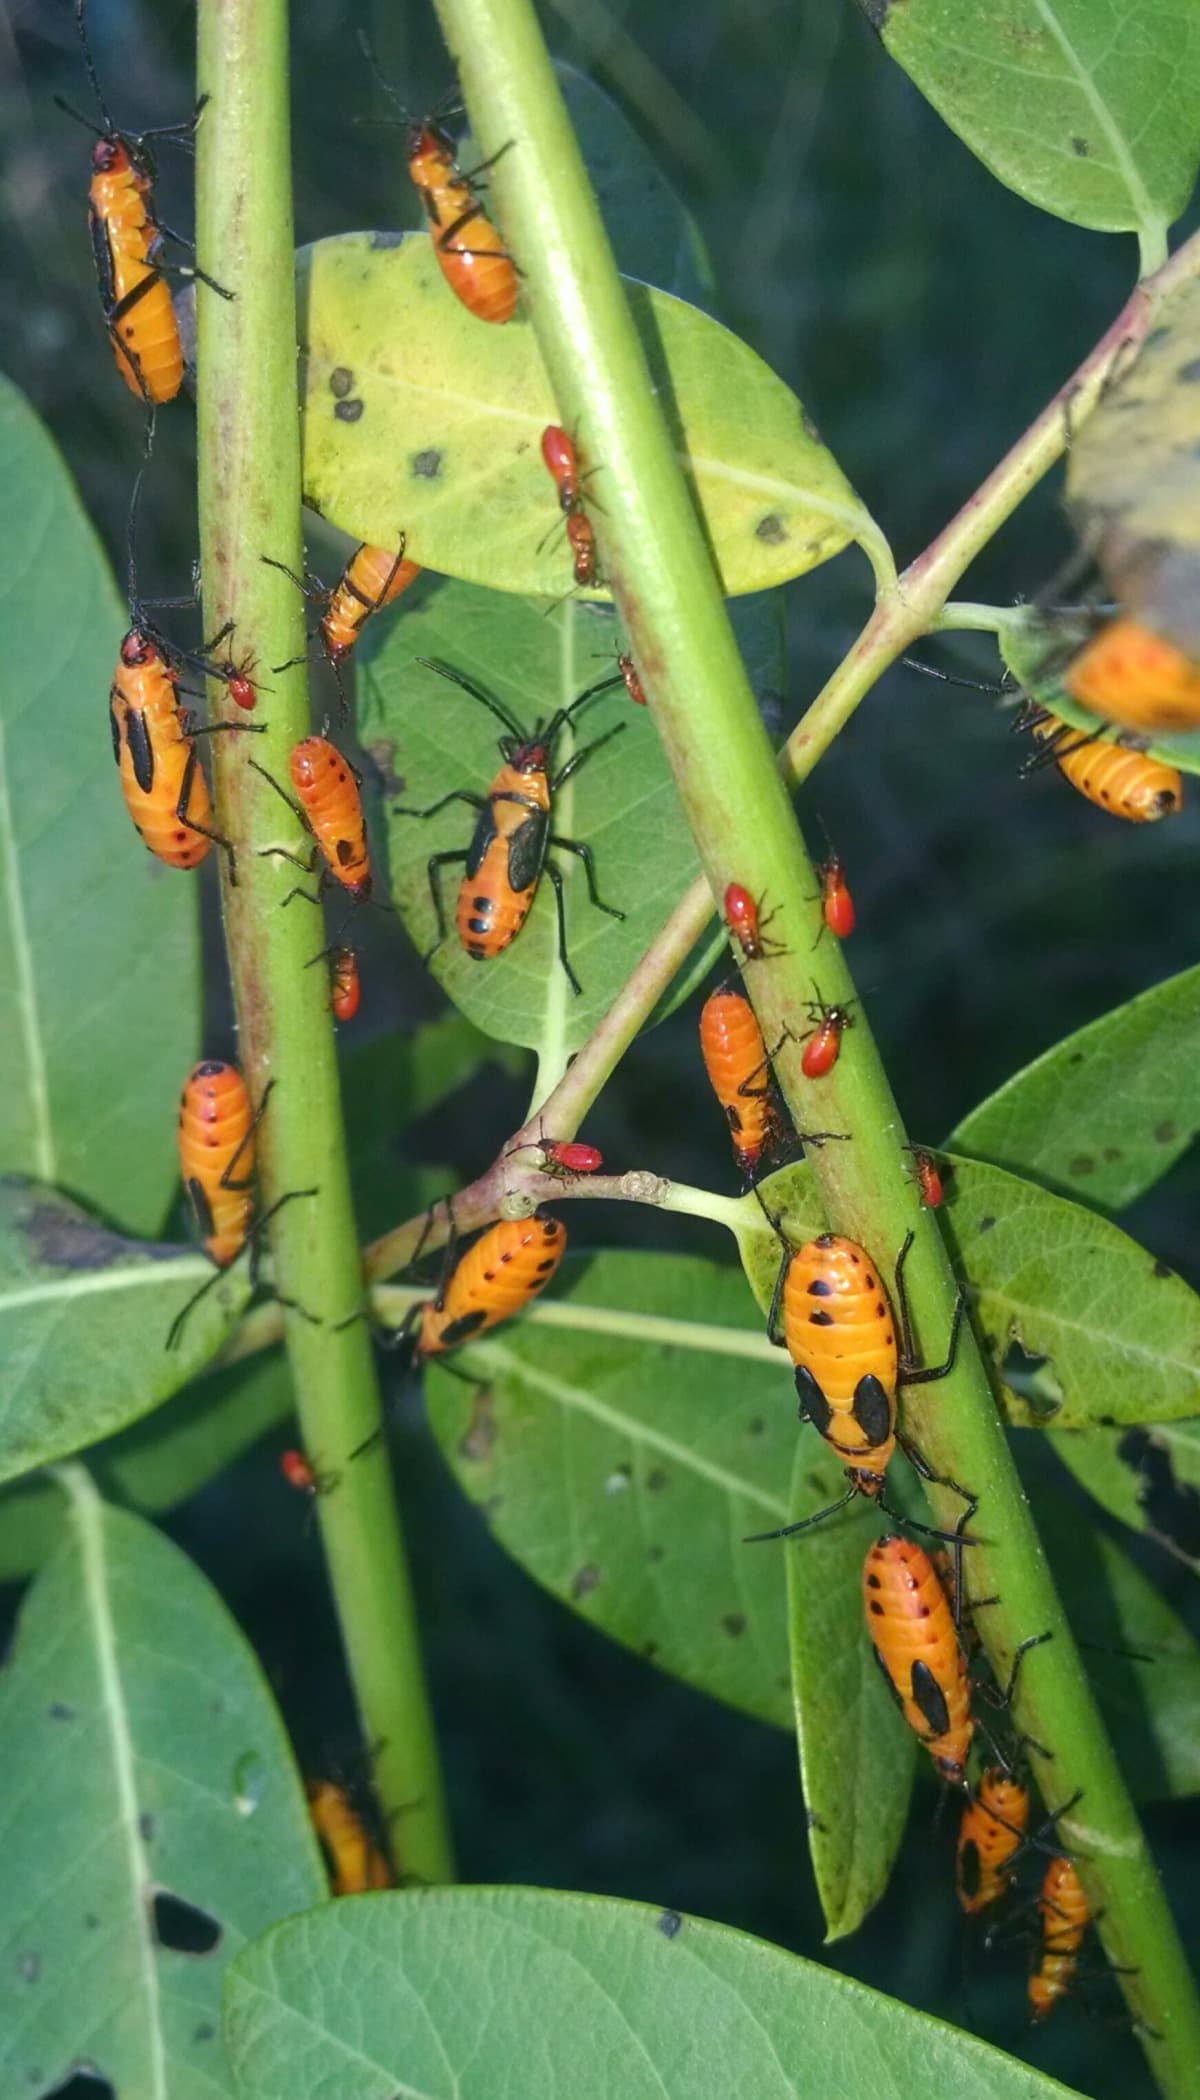 Boxelder bugs on plant